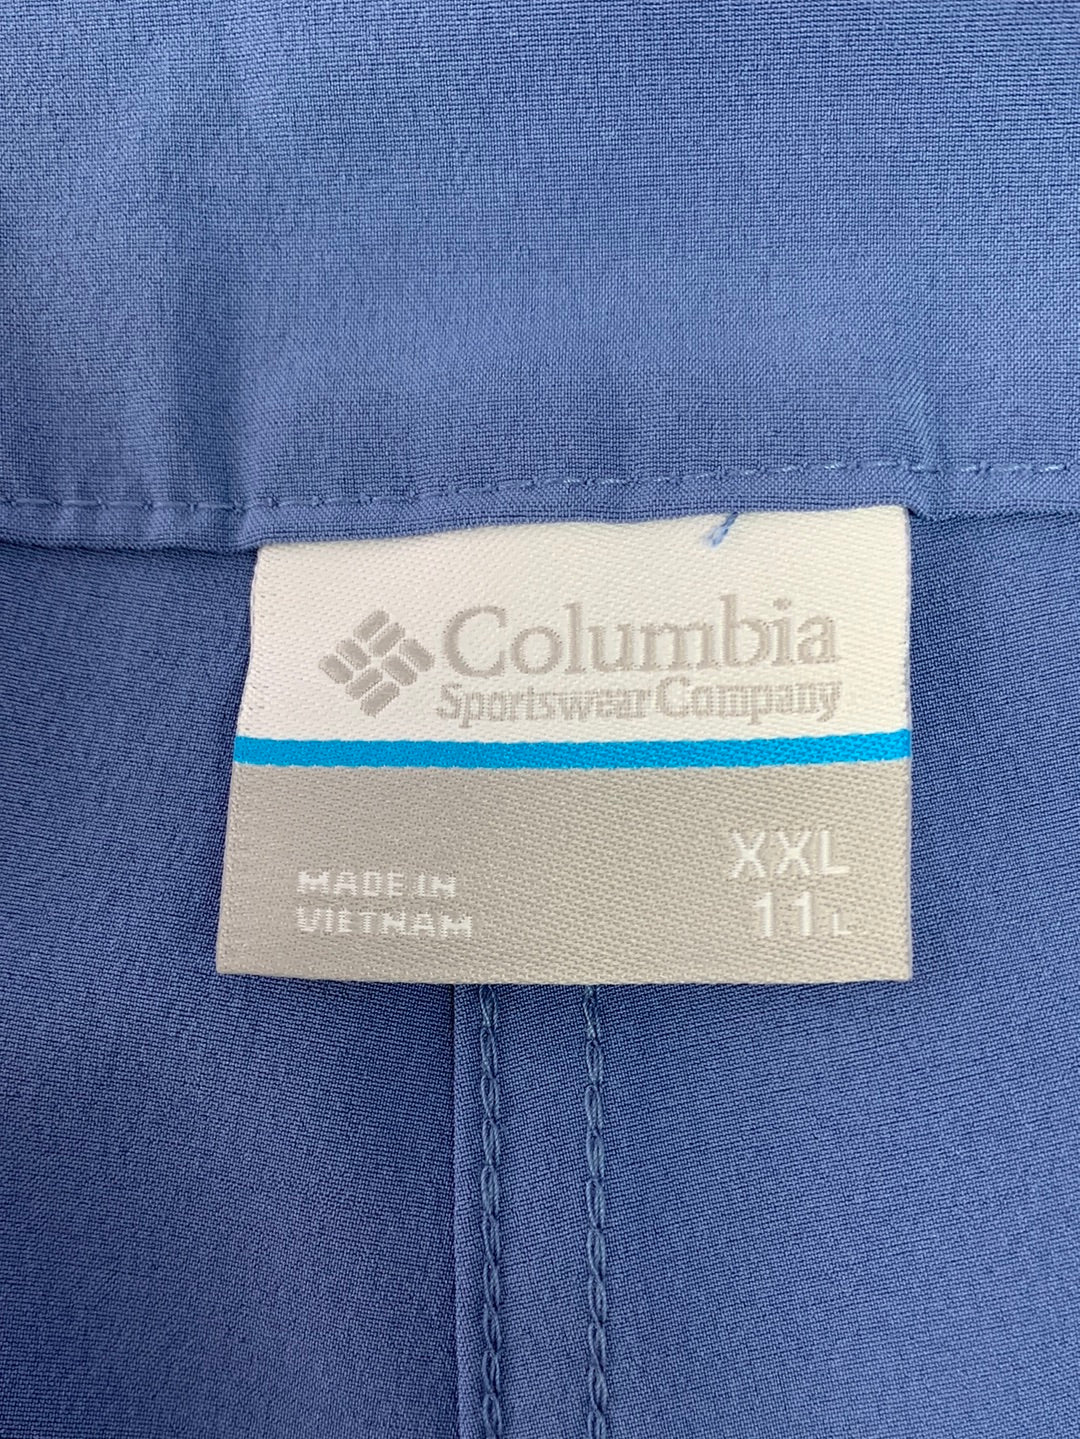 NWT - COLUMBIA blue Omni-Shade 50 UPF Pleasant Creek Board Shorts - XXL